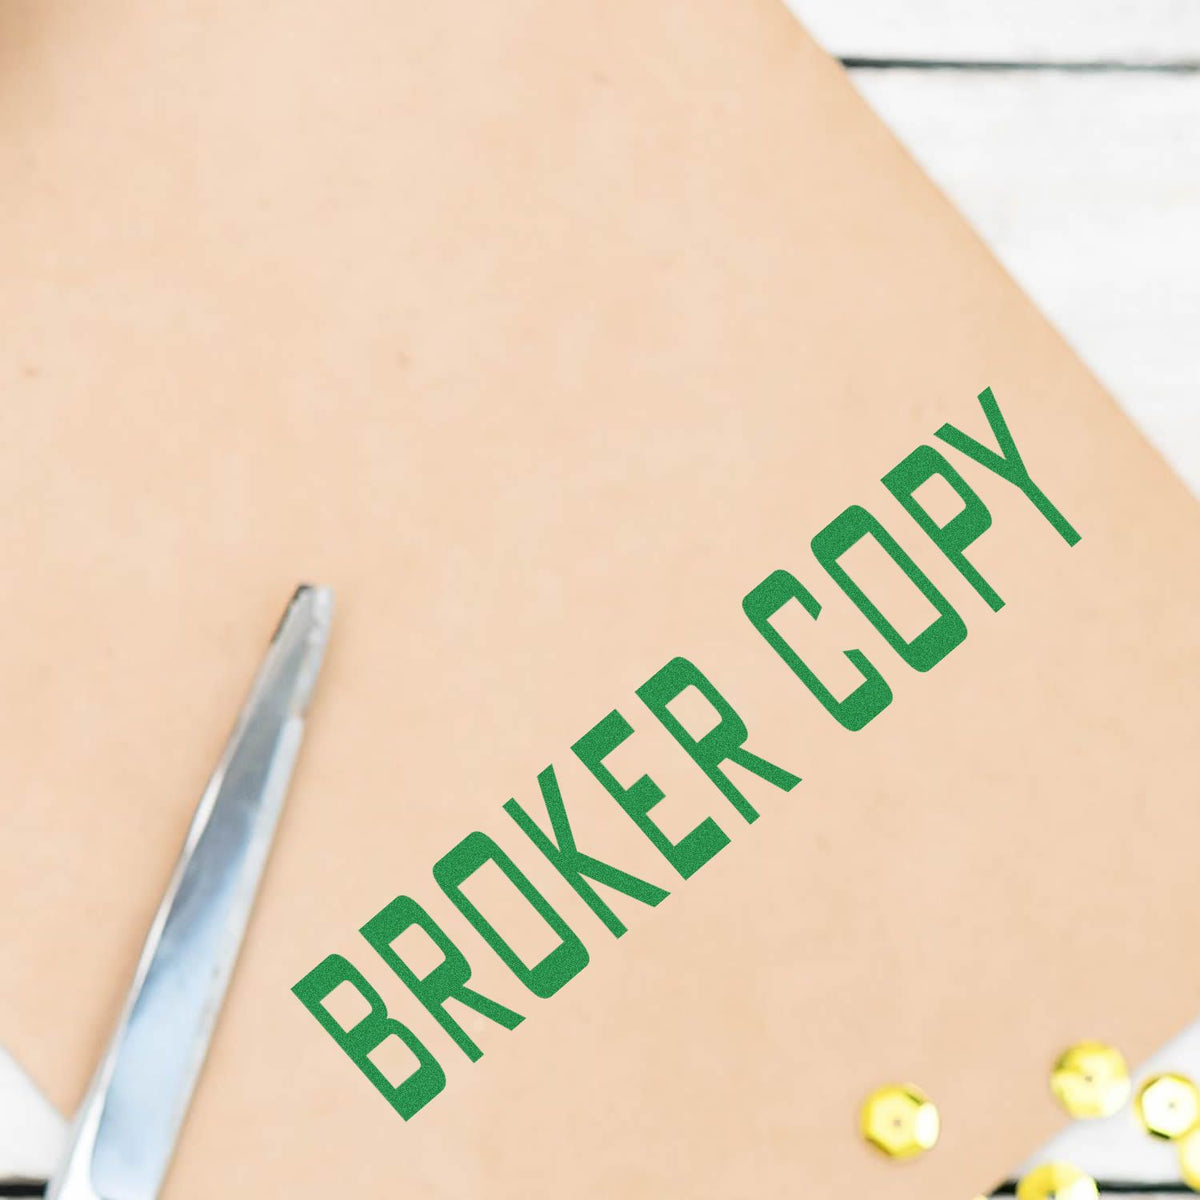 Self-Inking Broker Copy Stamp In Use